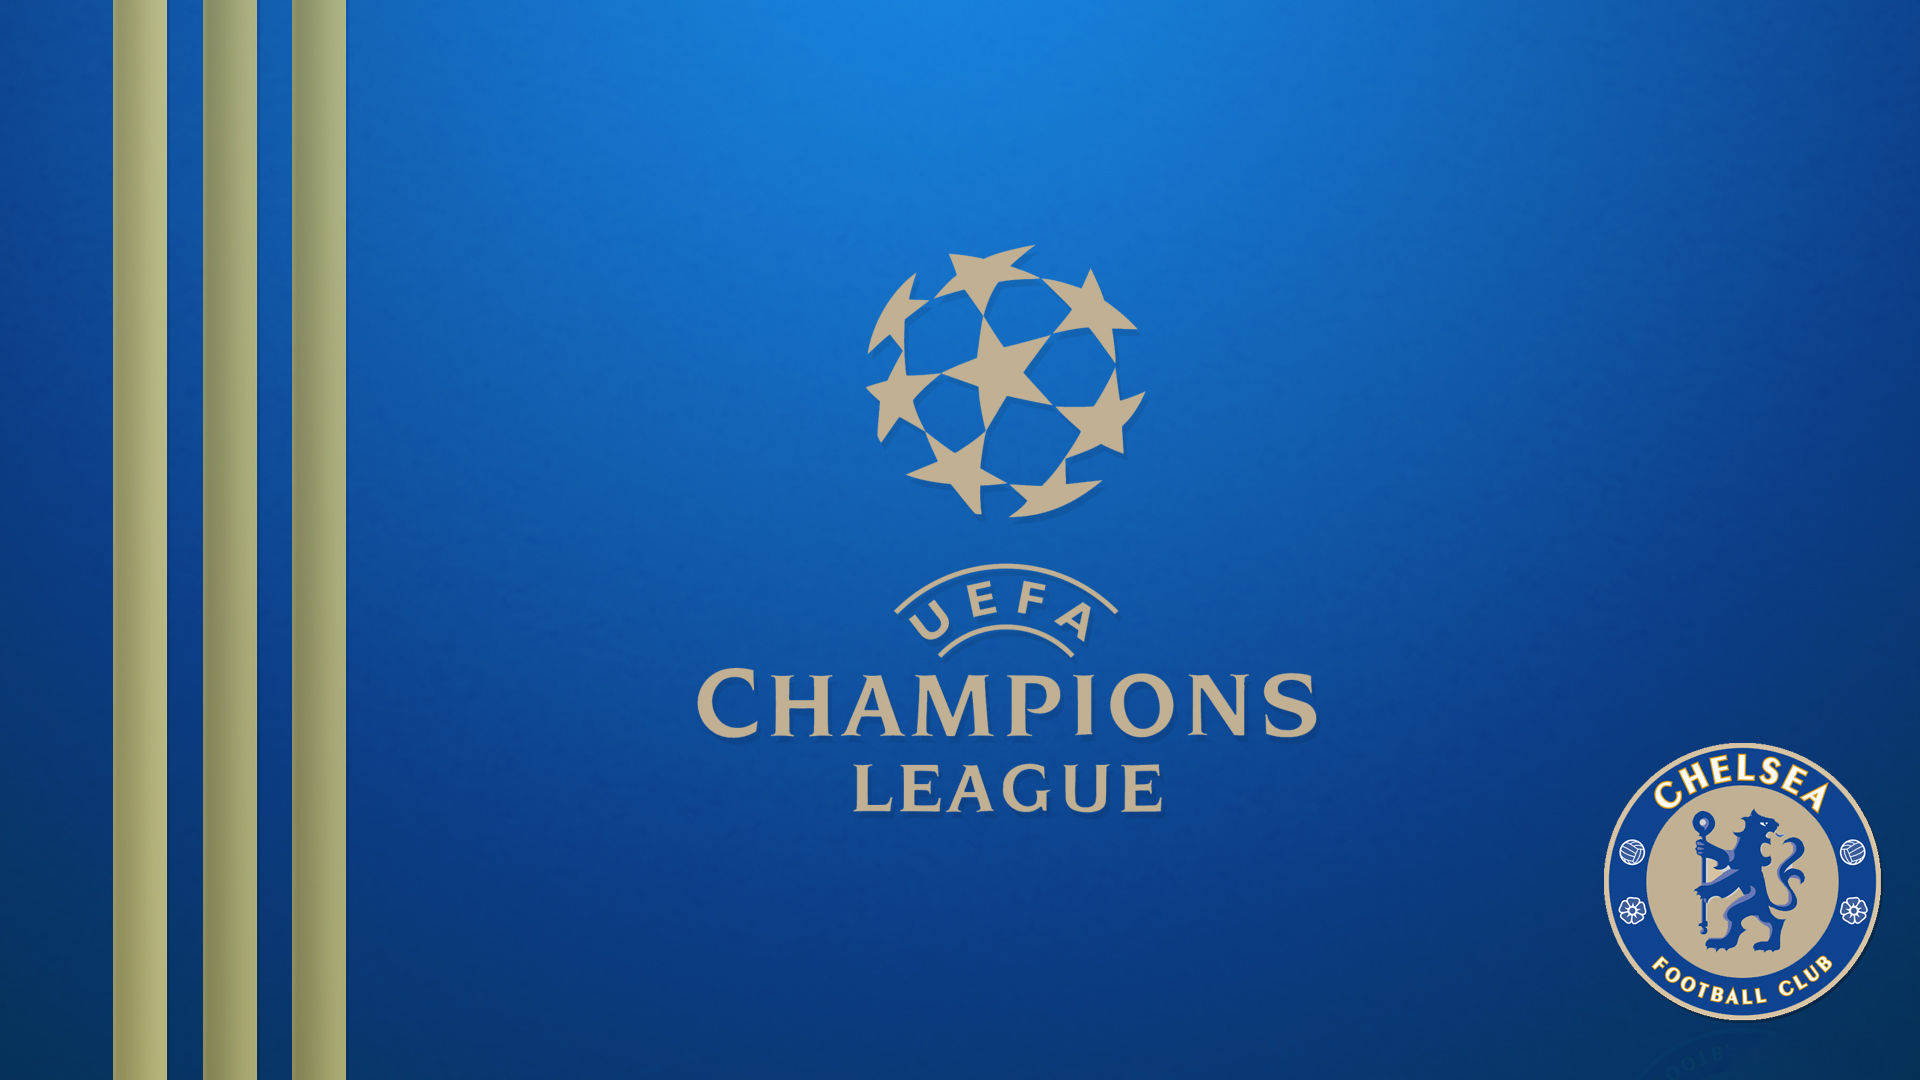 Uefa Champions League X Chelsea Football Club Background